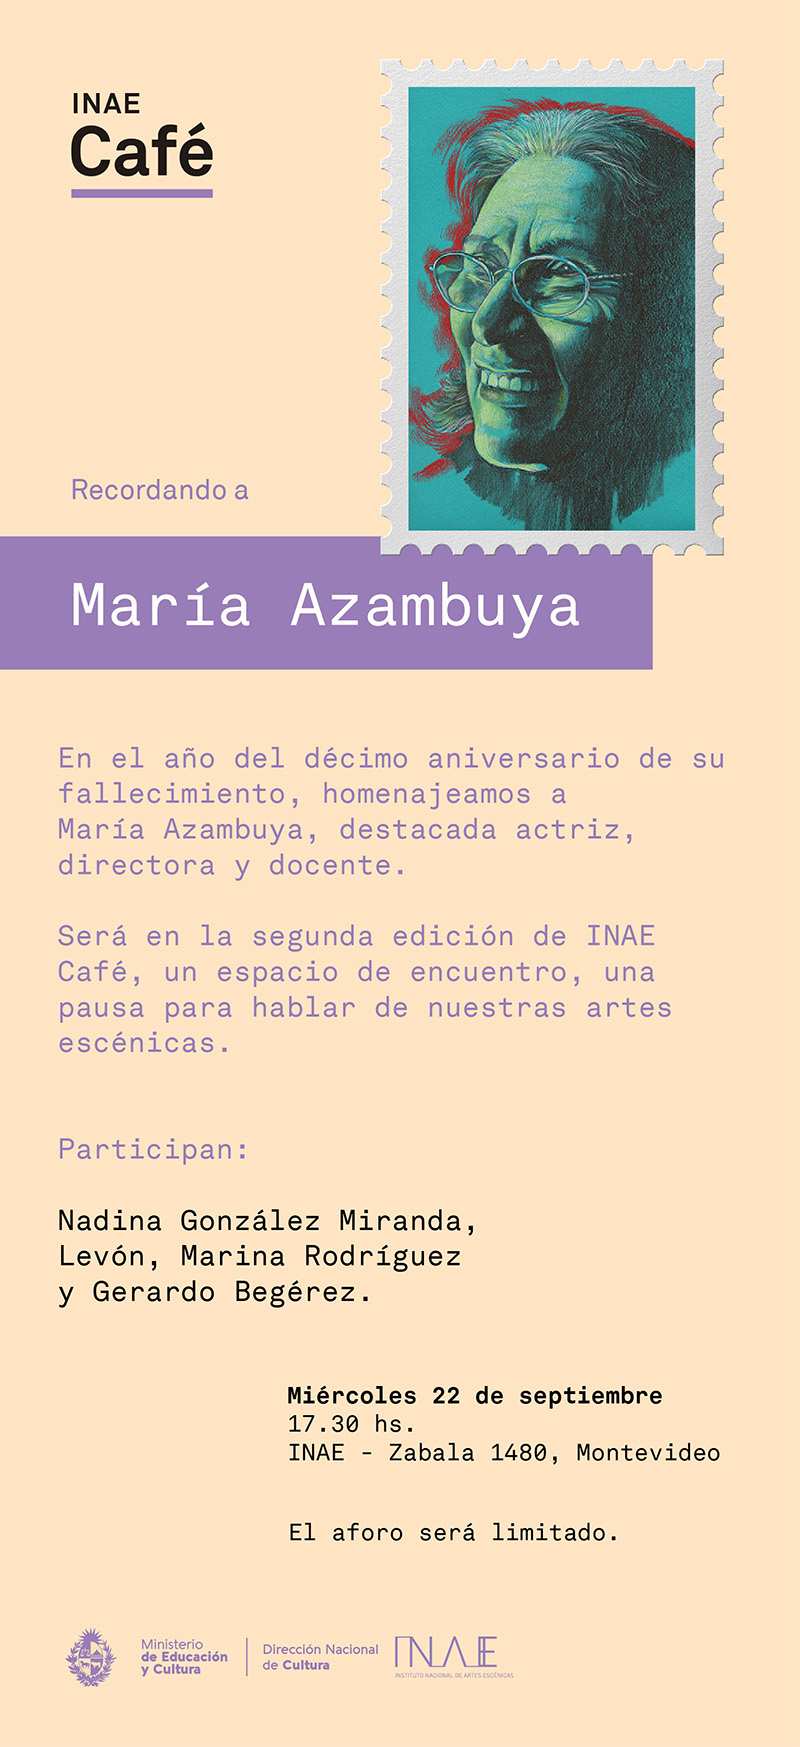 INAE Café María Azambuya